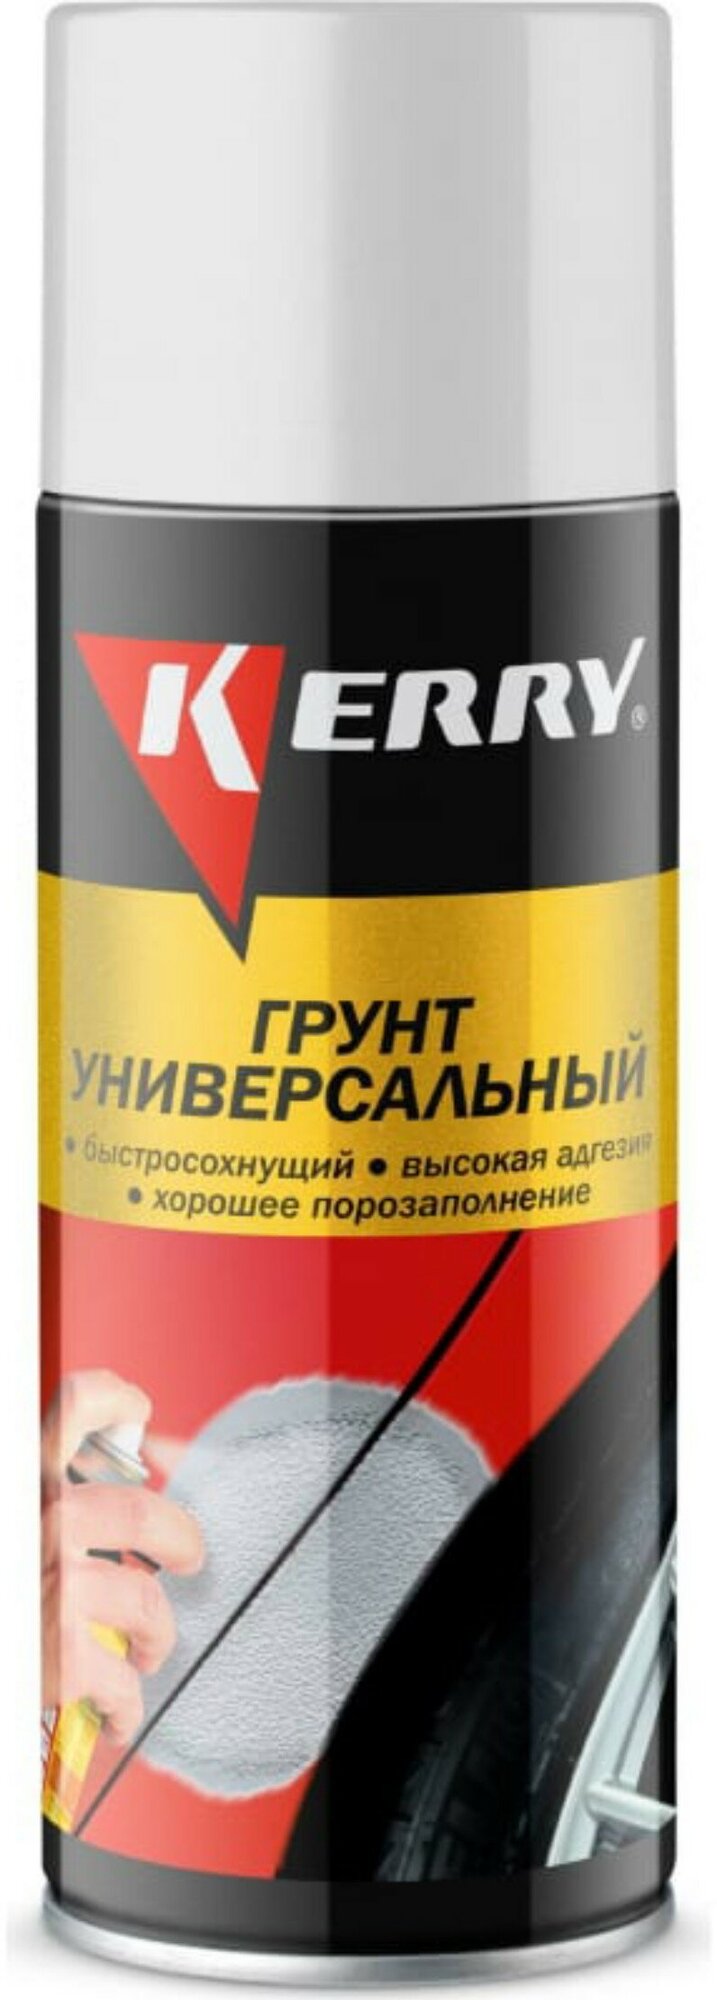 Грунтовка Черная 520Мл Kr-925-3 Kerry Kerry арт. KR9253